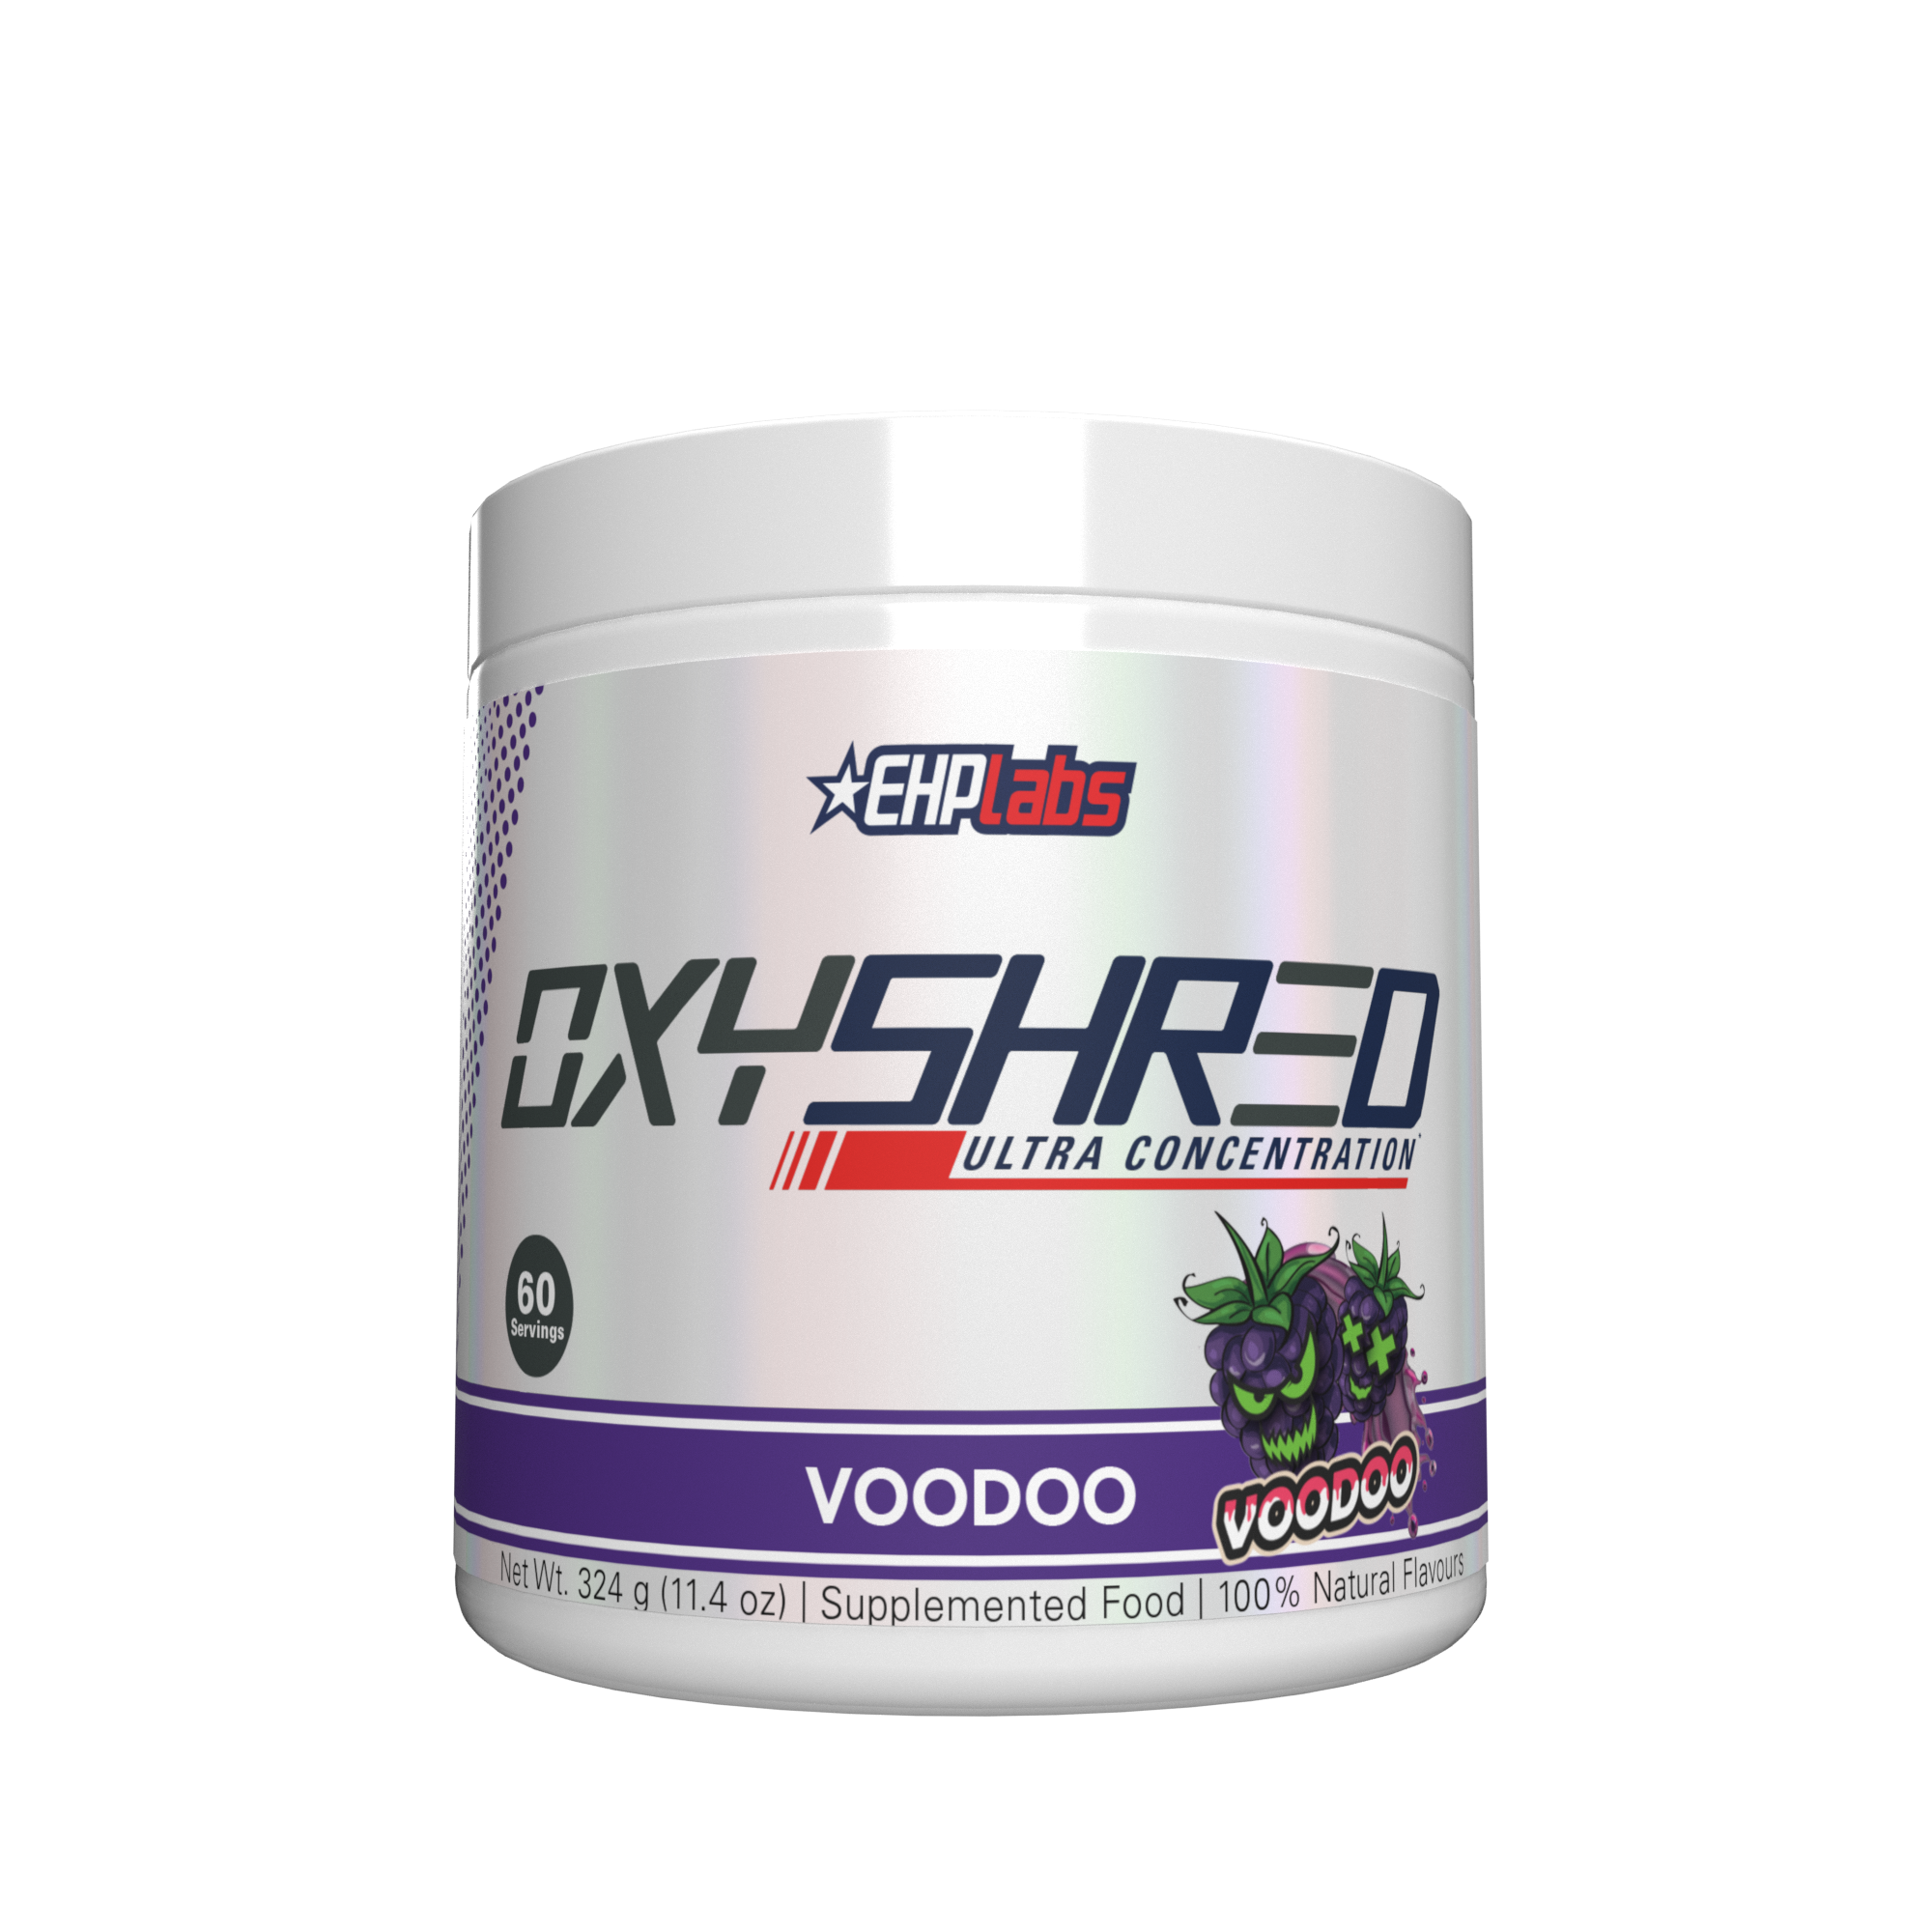 OxyShred Voodoo